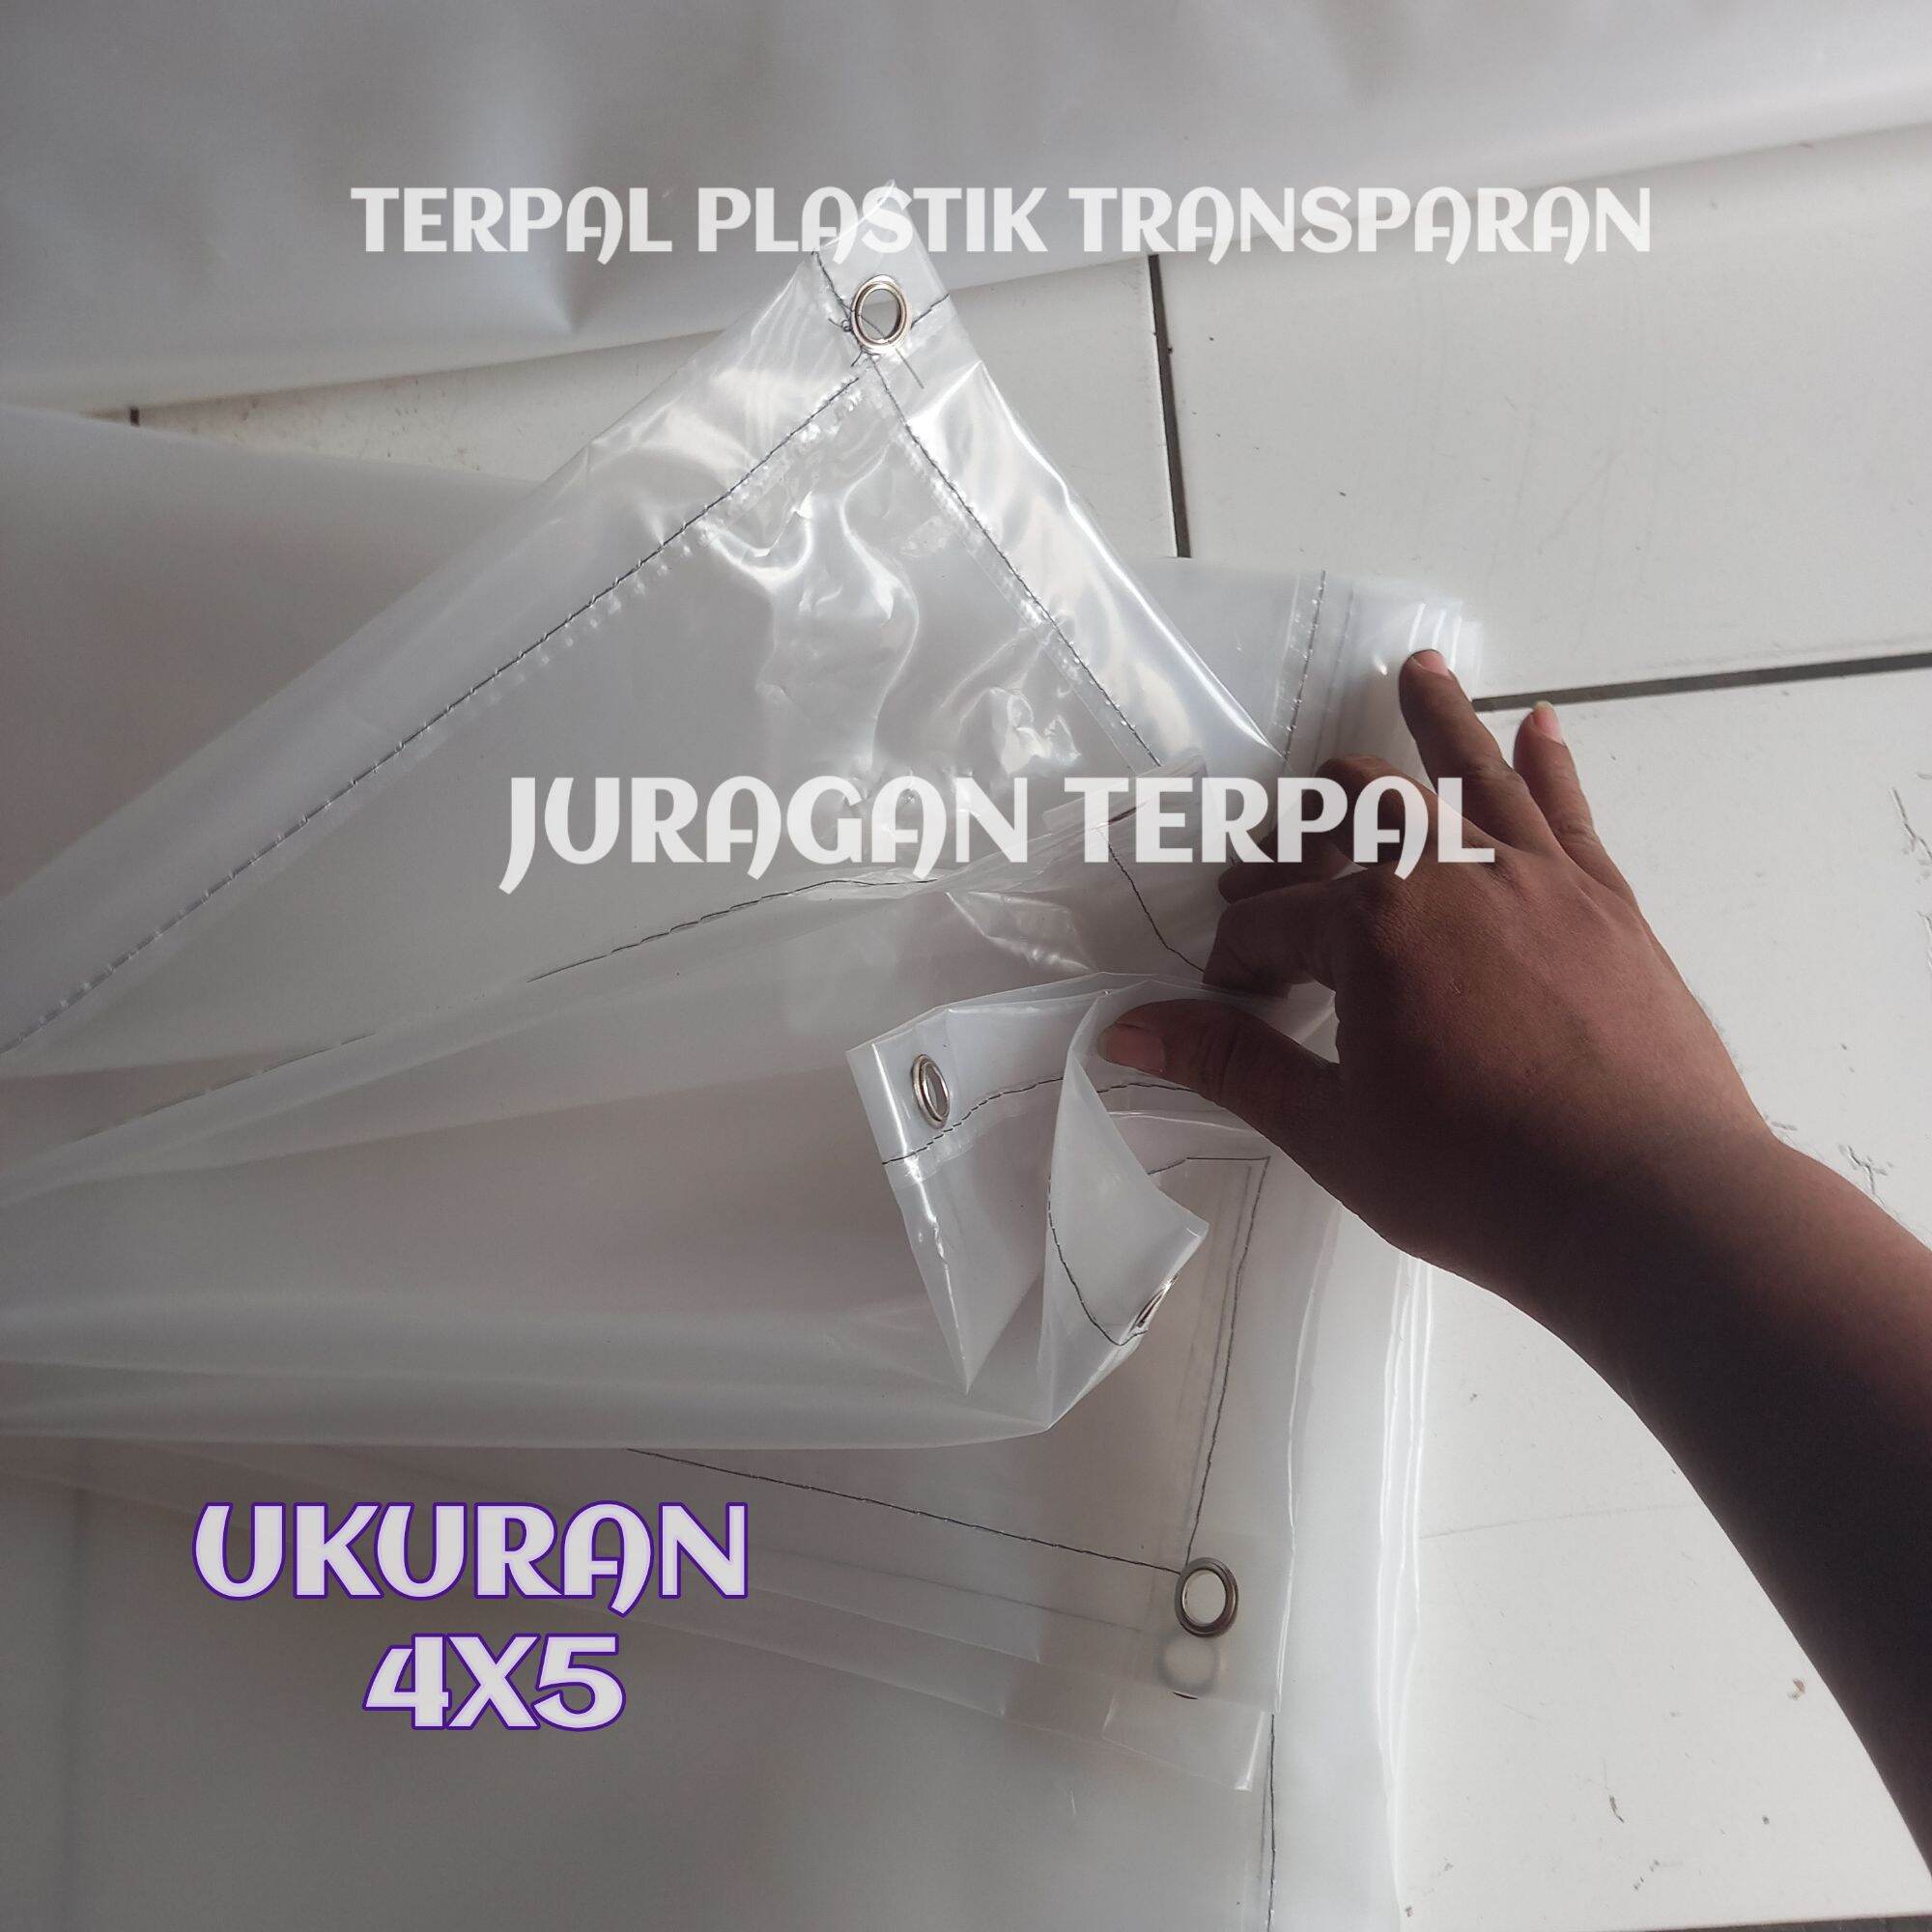 Terpal Plastik Bening Transparan Ukuran 4x5 Lazada Indonesia 8318